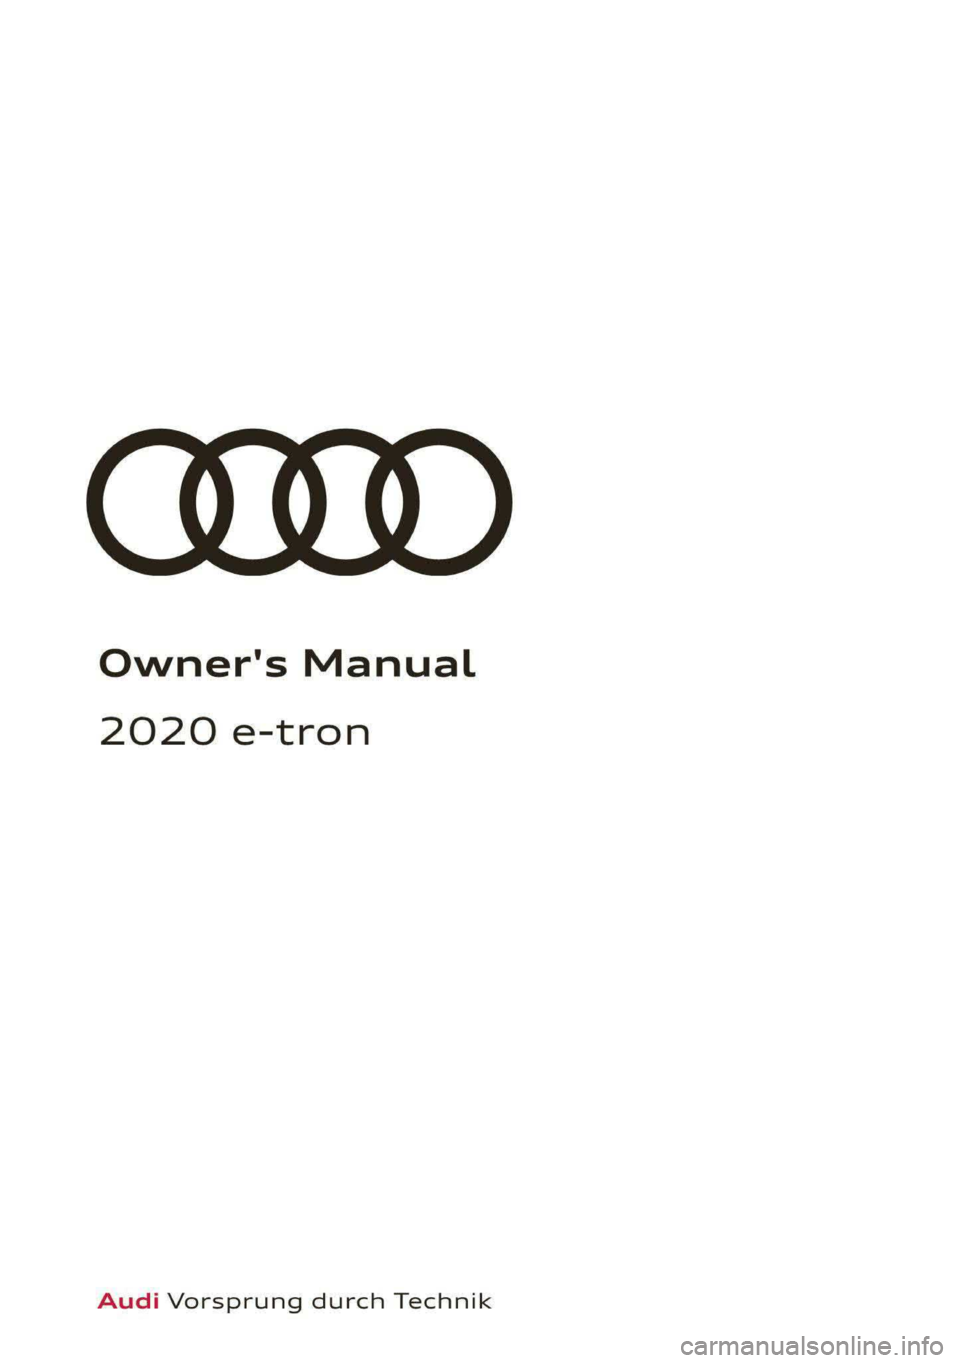 AUDI E-TRON 2020  Owners Manual Owner's Manual 
2020 e-tron 
Audi Vorsprung durch Technik  